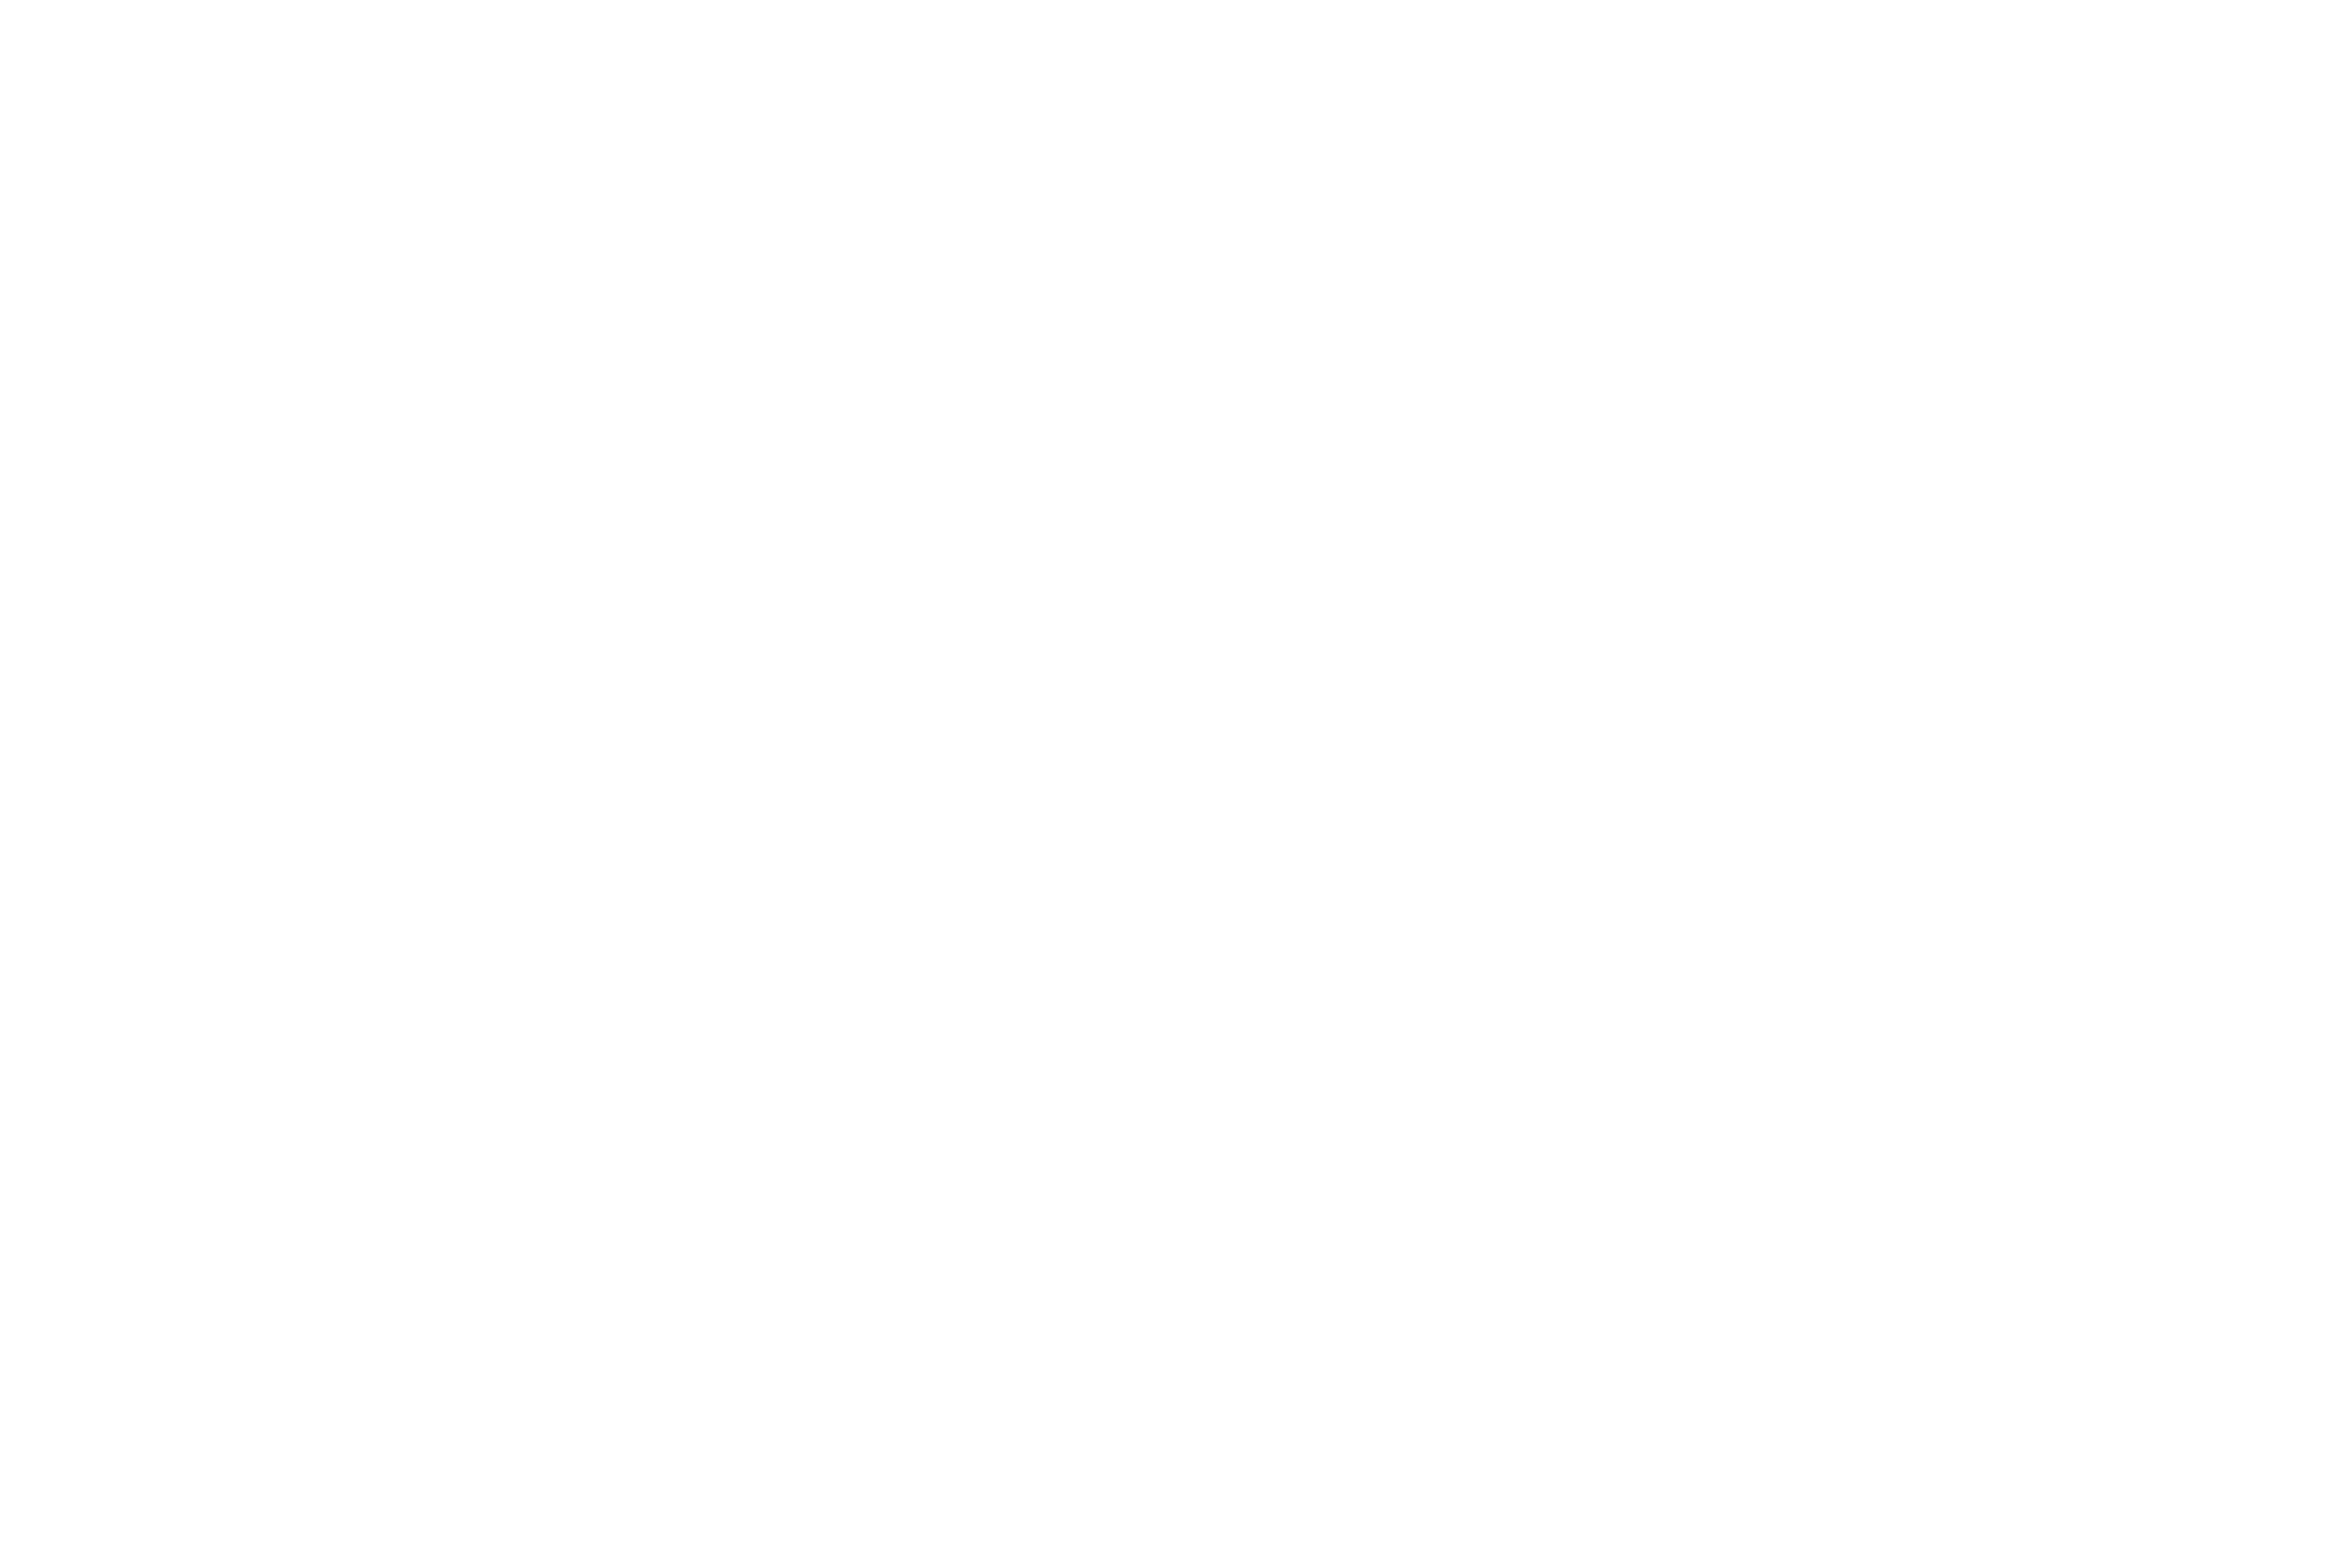 Orania-Foto - Mobile Fotografie